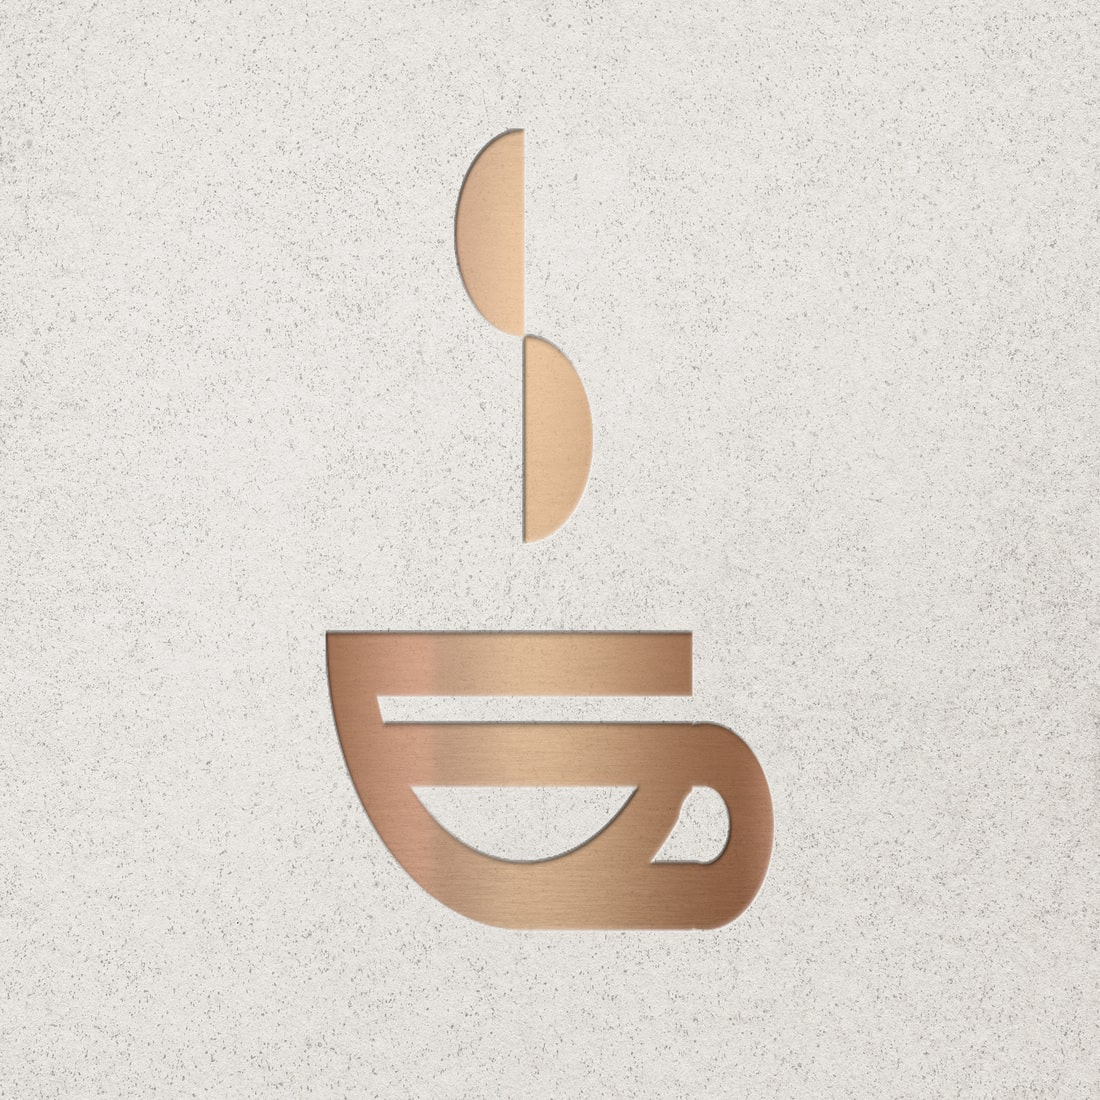 Custom Cup Logo Designs cover image.